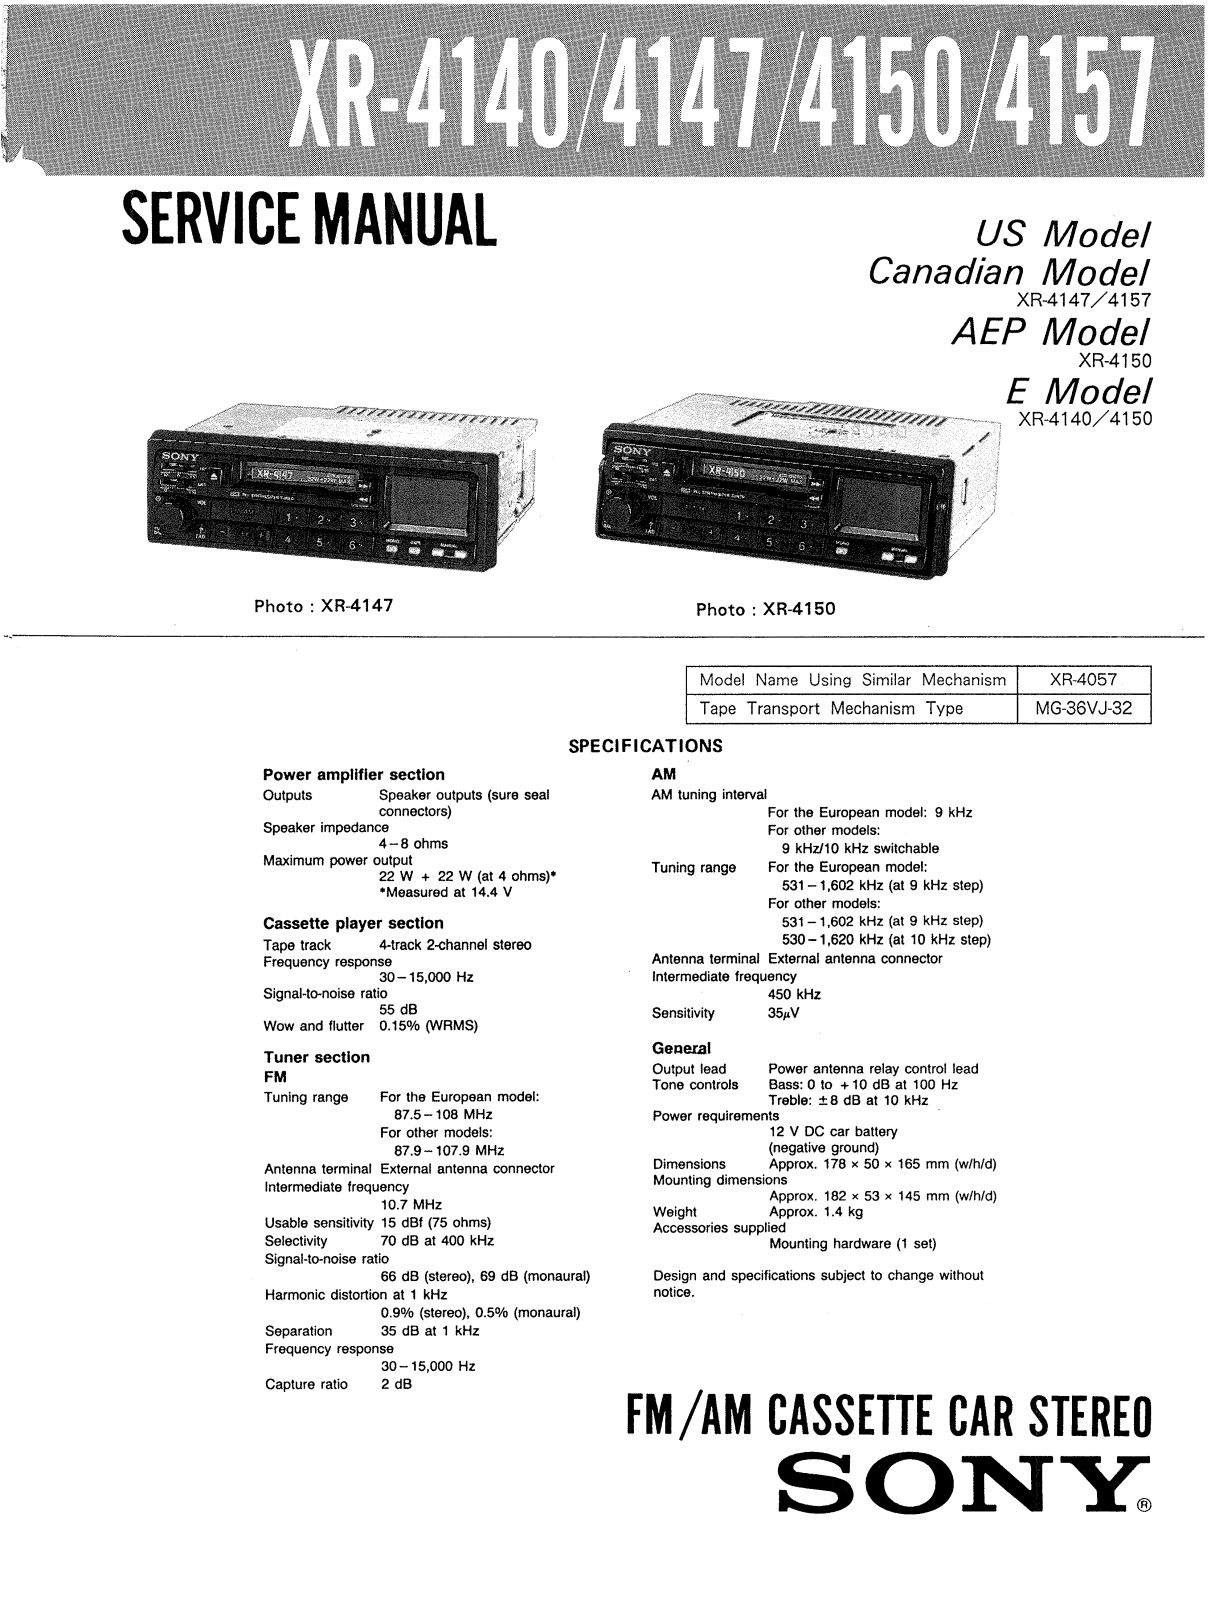 Sony XR-4140, XR-4147, XR-4150, XR-4157 Service Manual